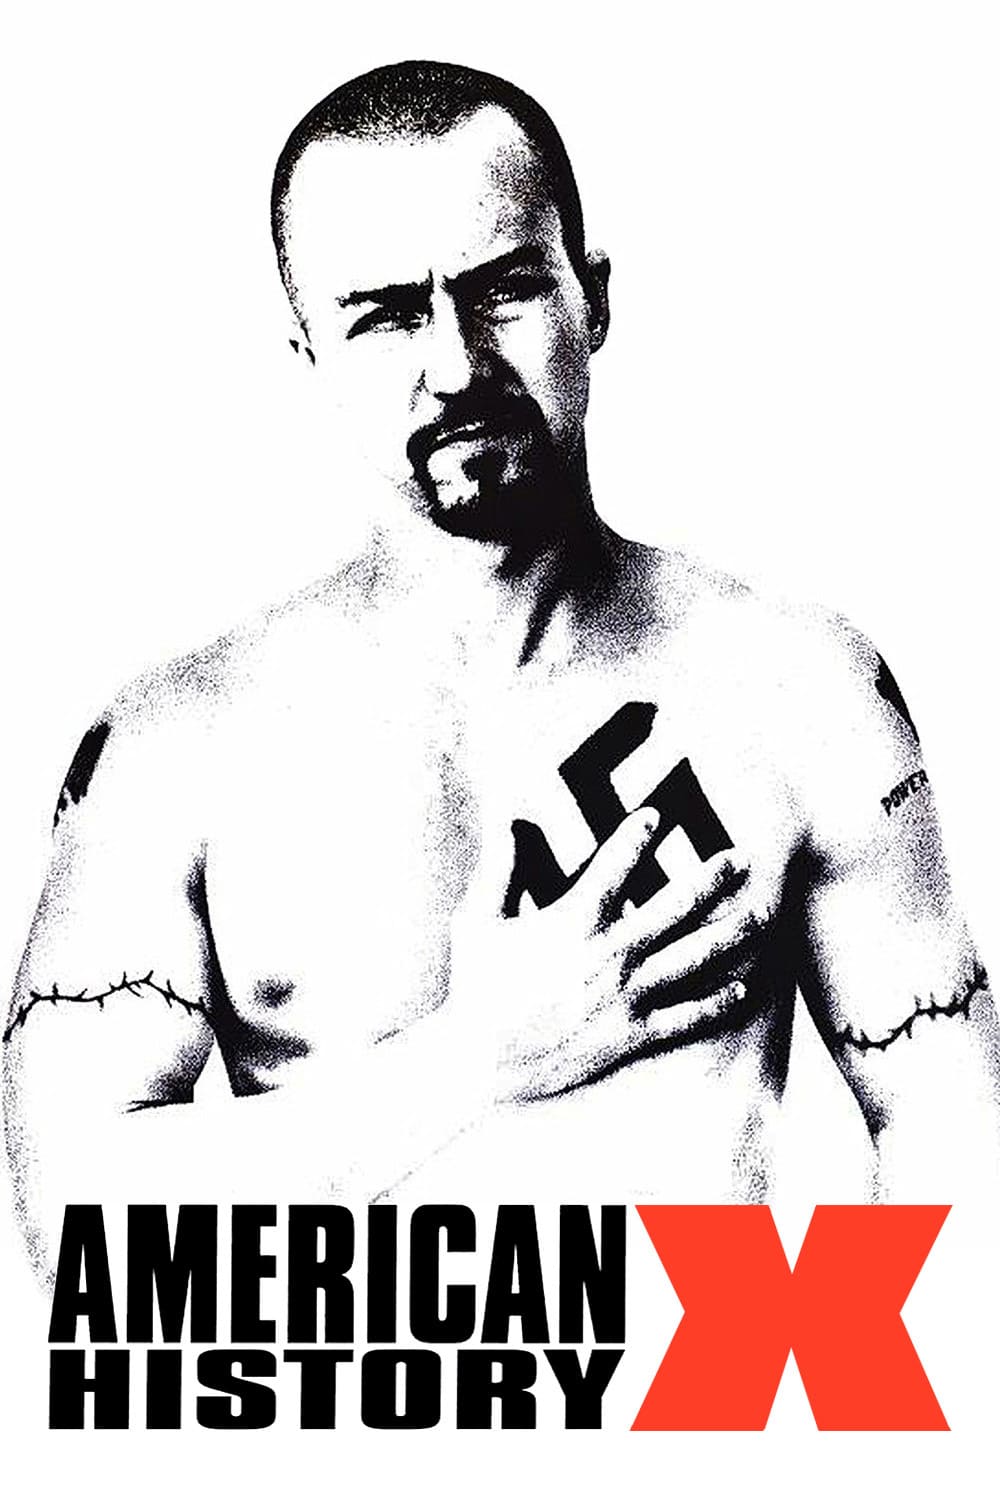 Affiche du film "American History X"